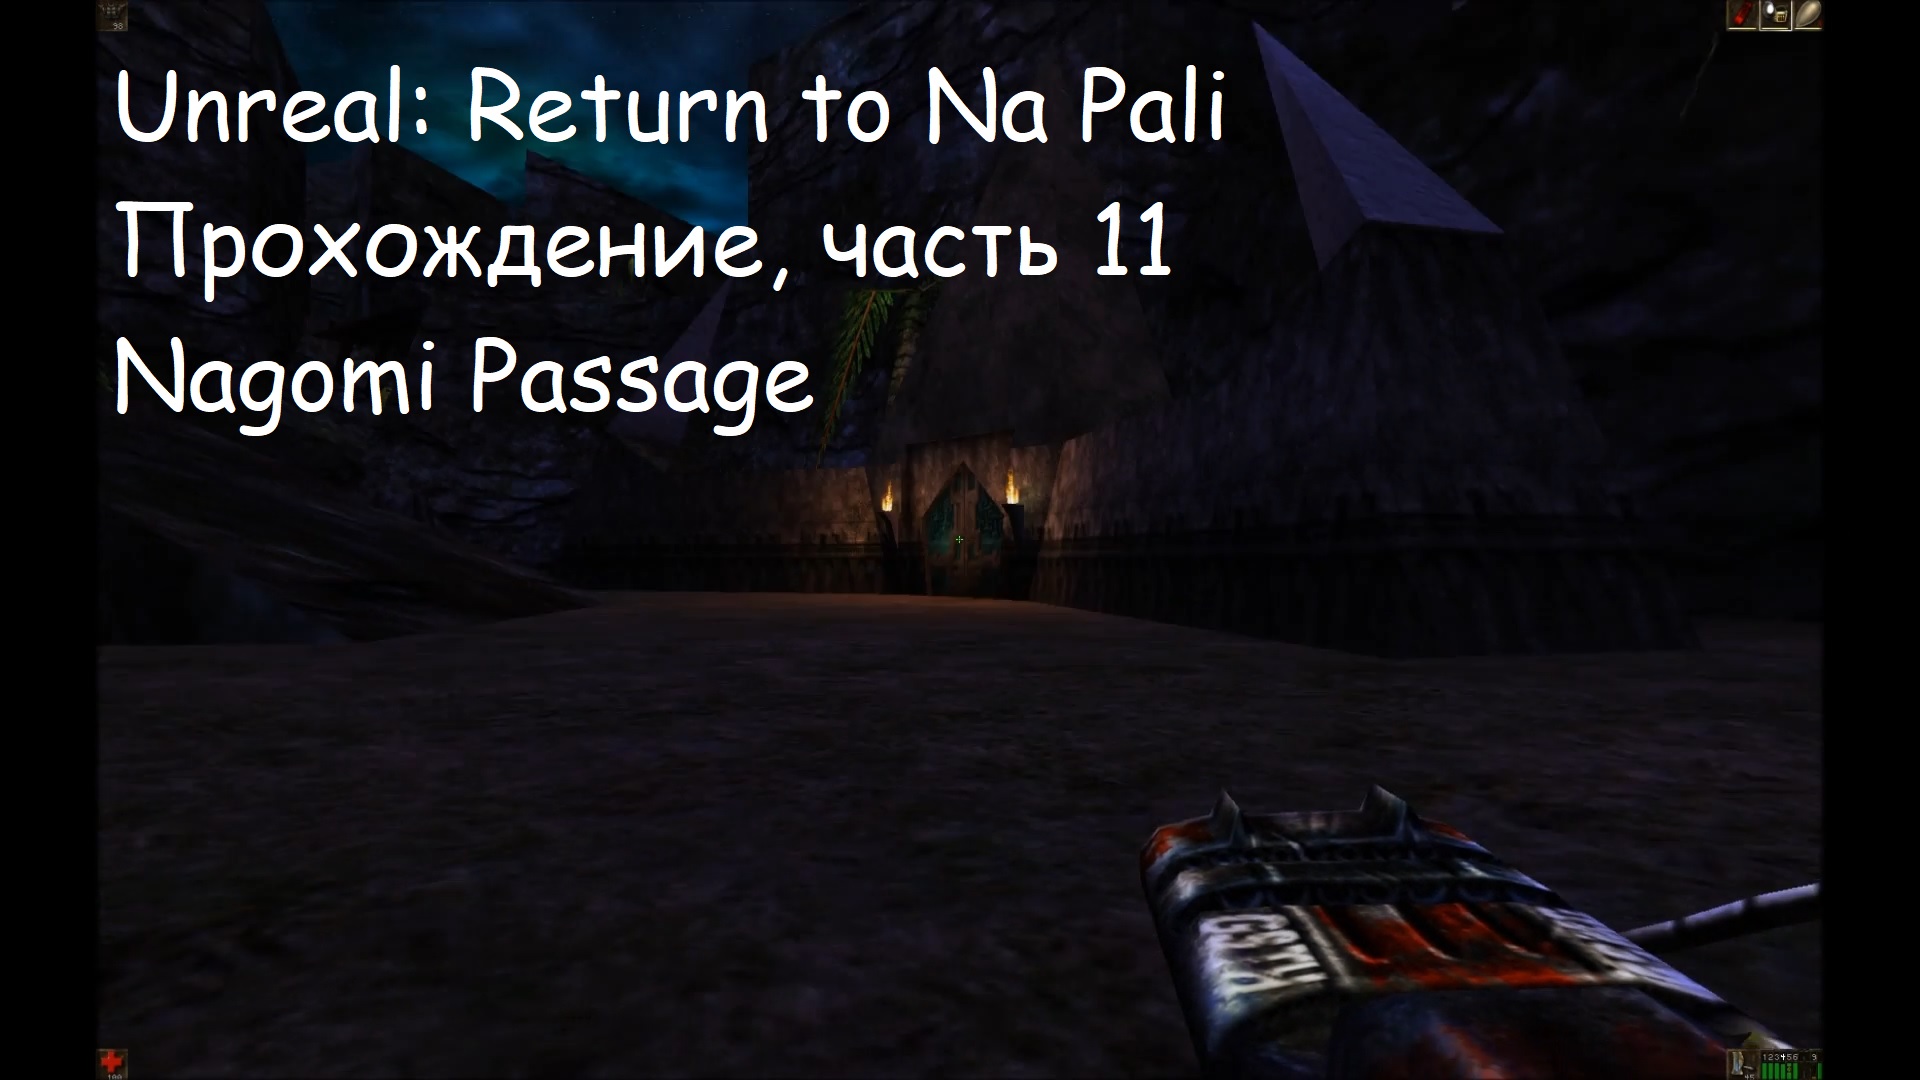 Unreal: Return to Na Pali, Прохождение, часть 11 - Nagomi Passage